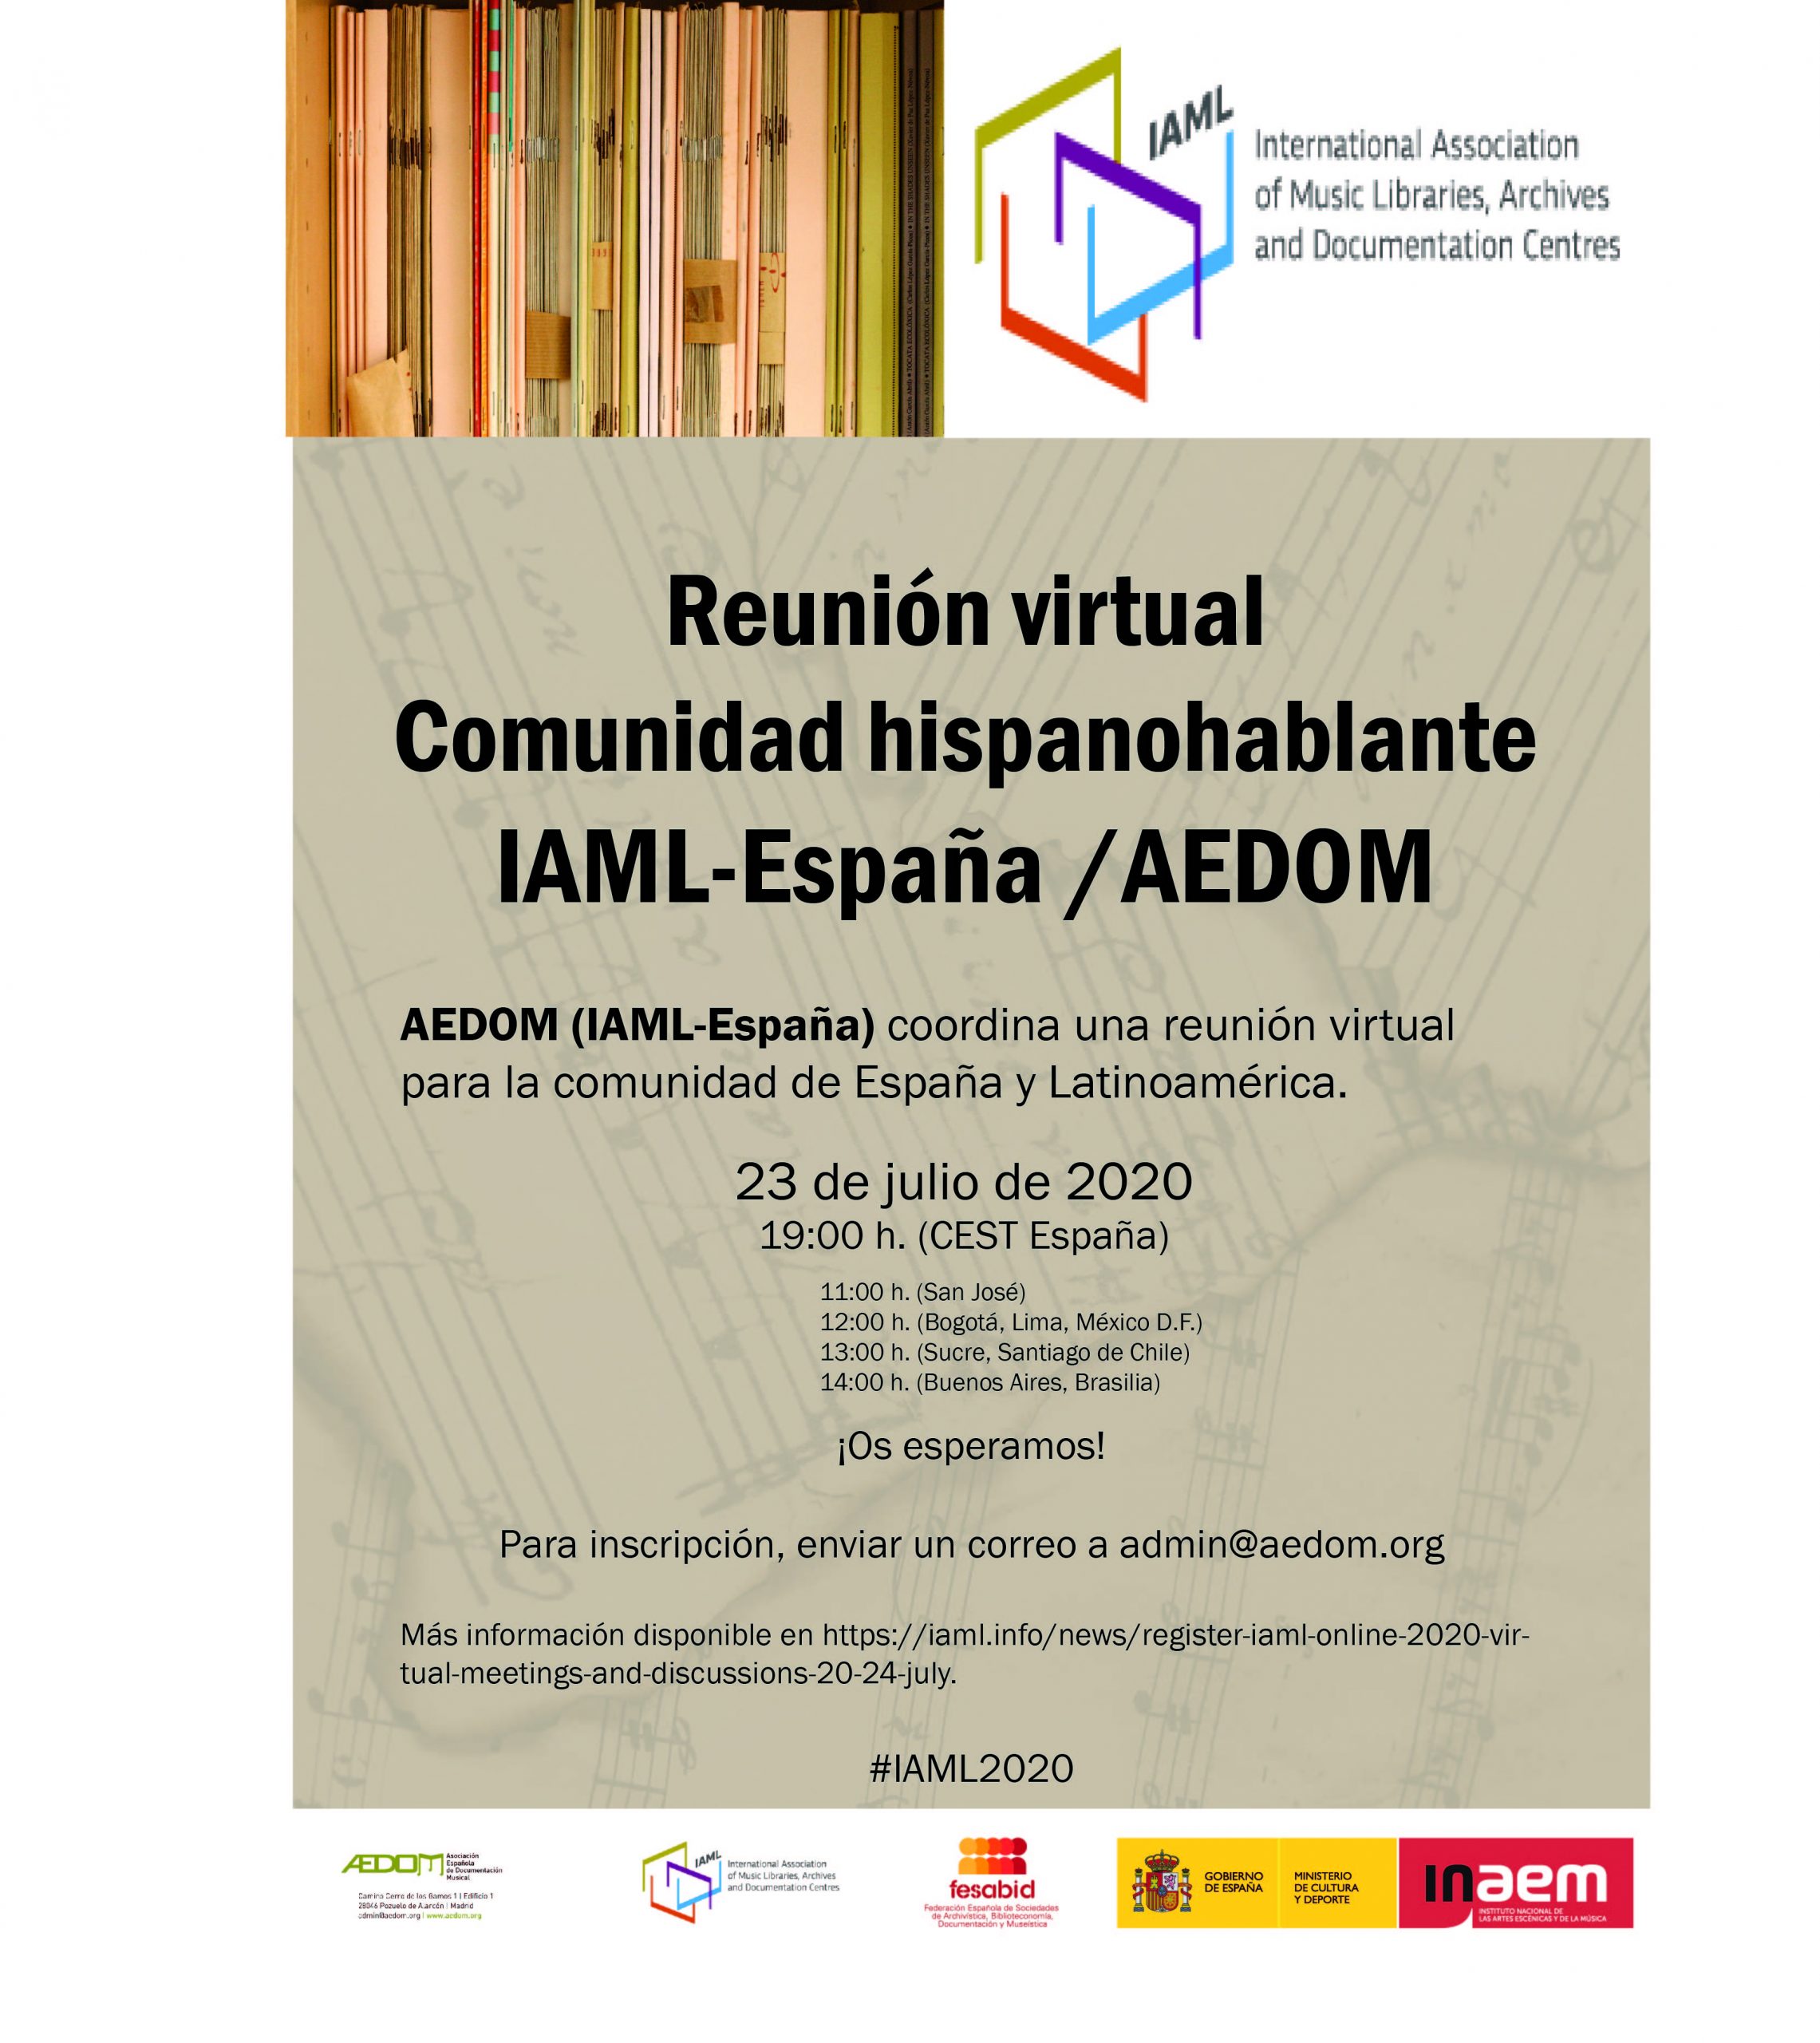 Reunion virtual para la comunidad hispanohablante – IAML España/AEDOM